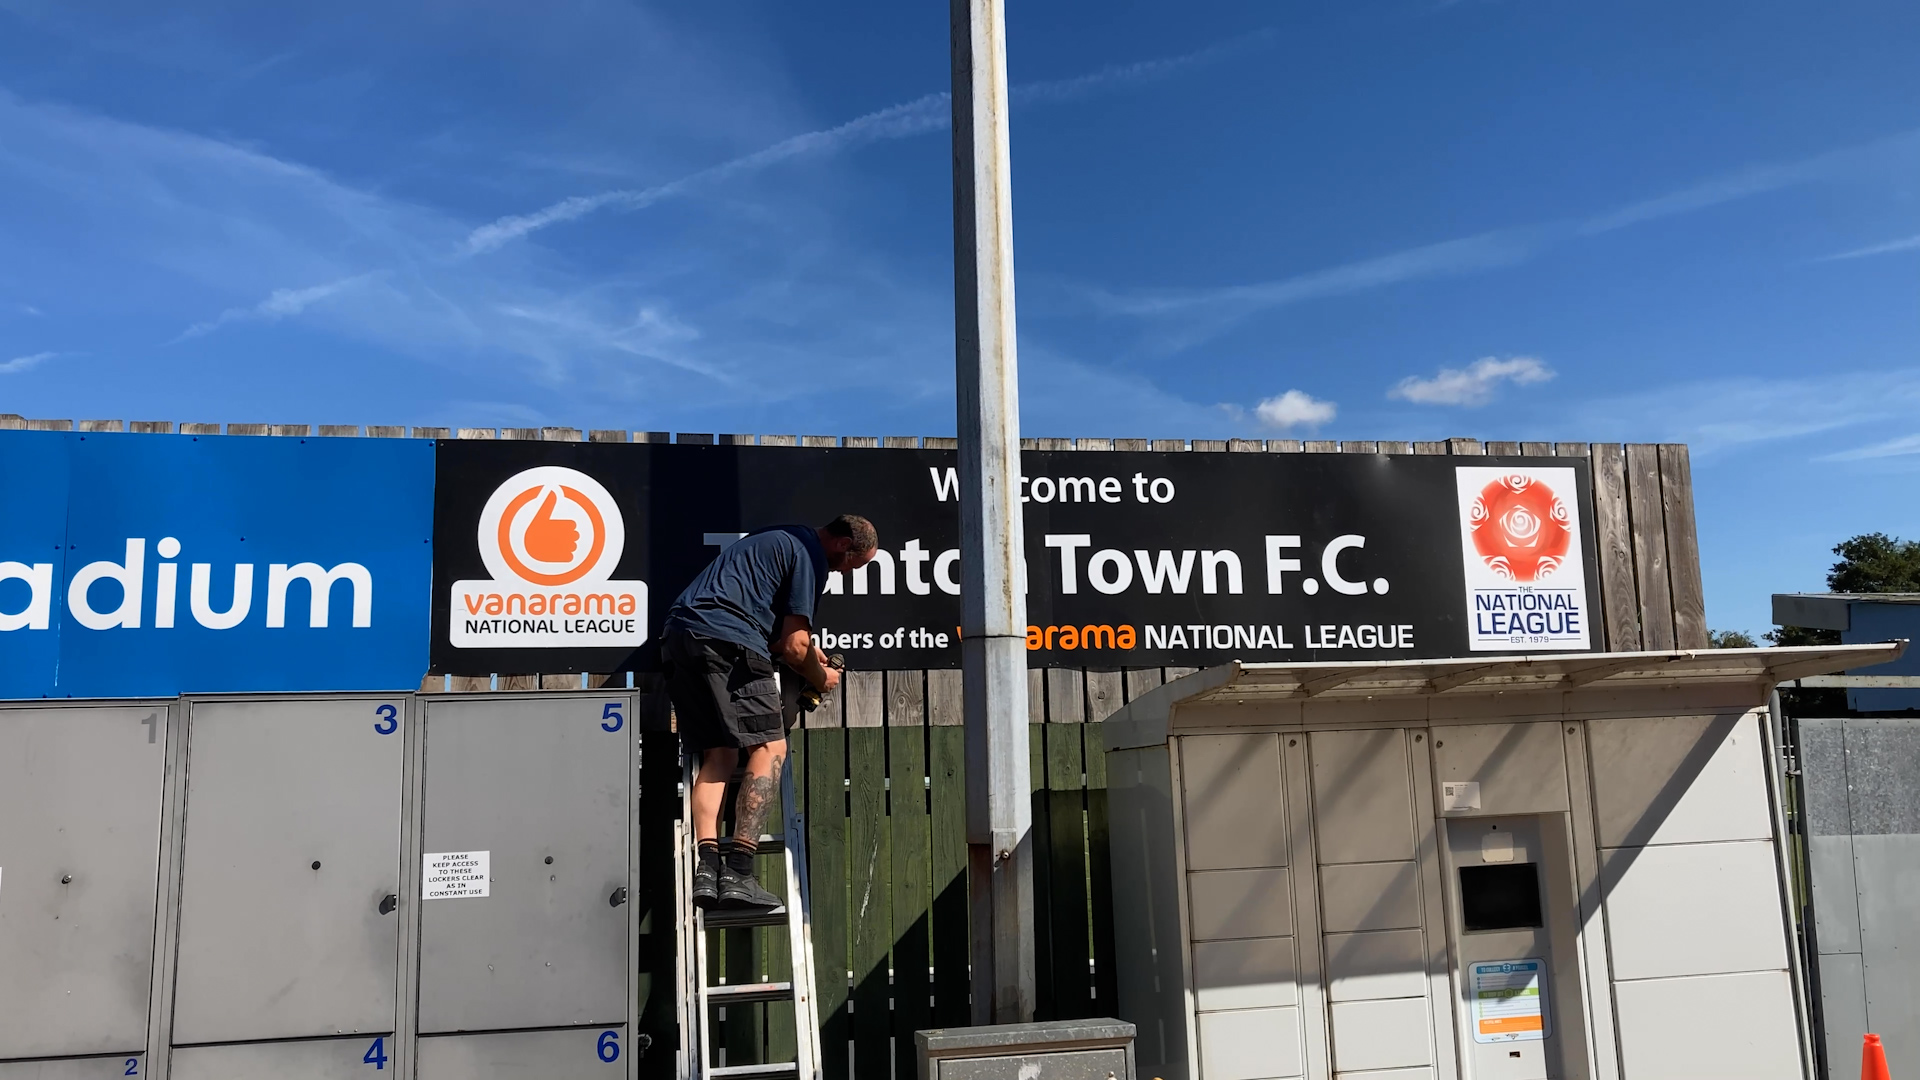 Club Shop Goes Online - Taunton Town Football Club